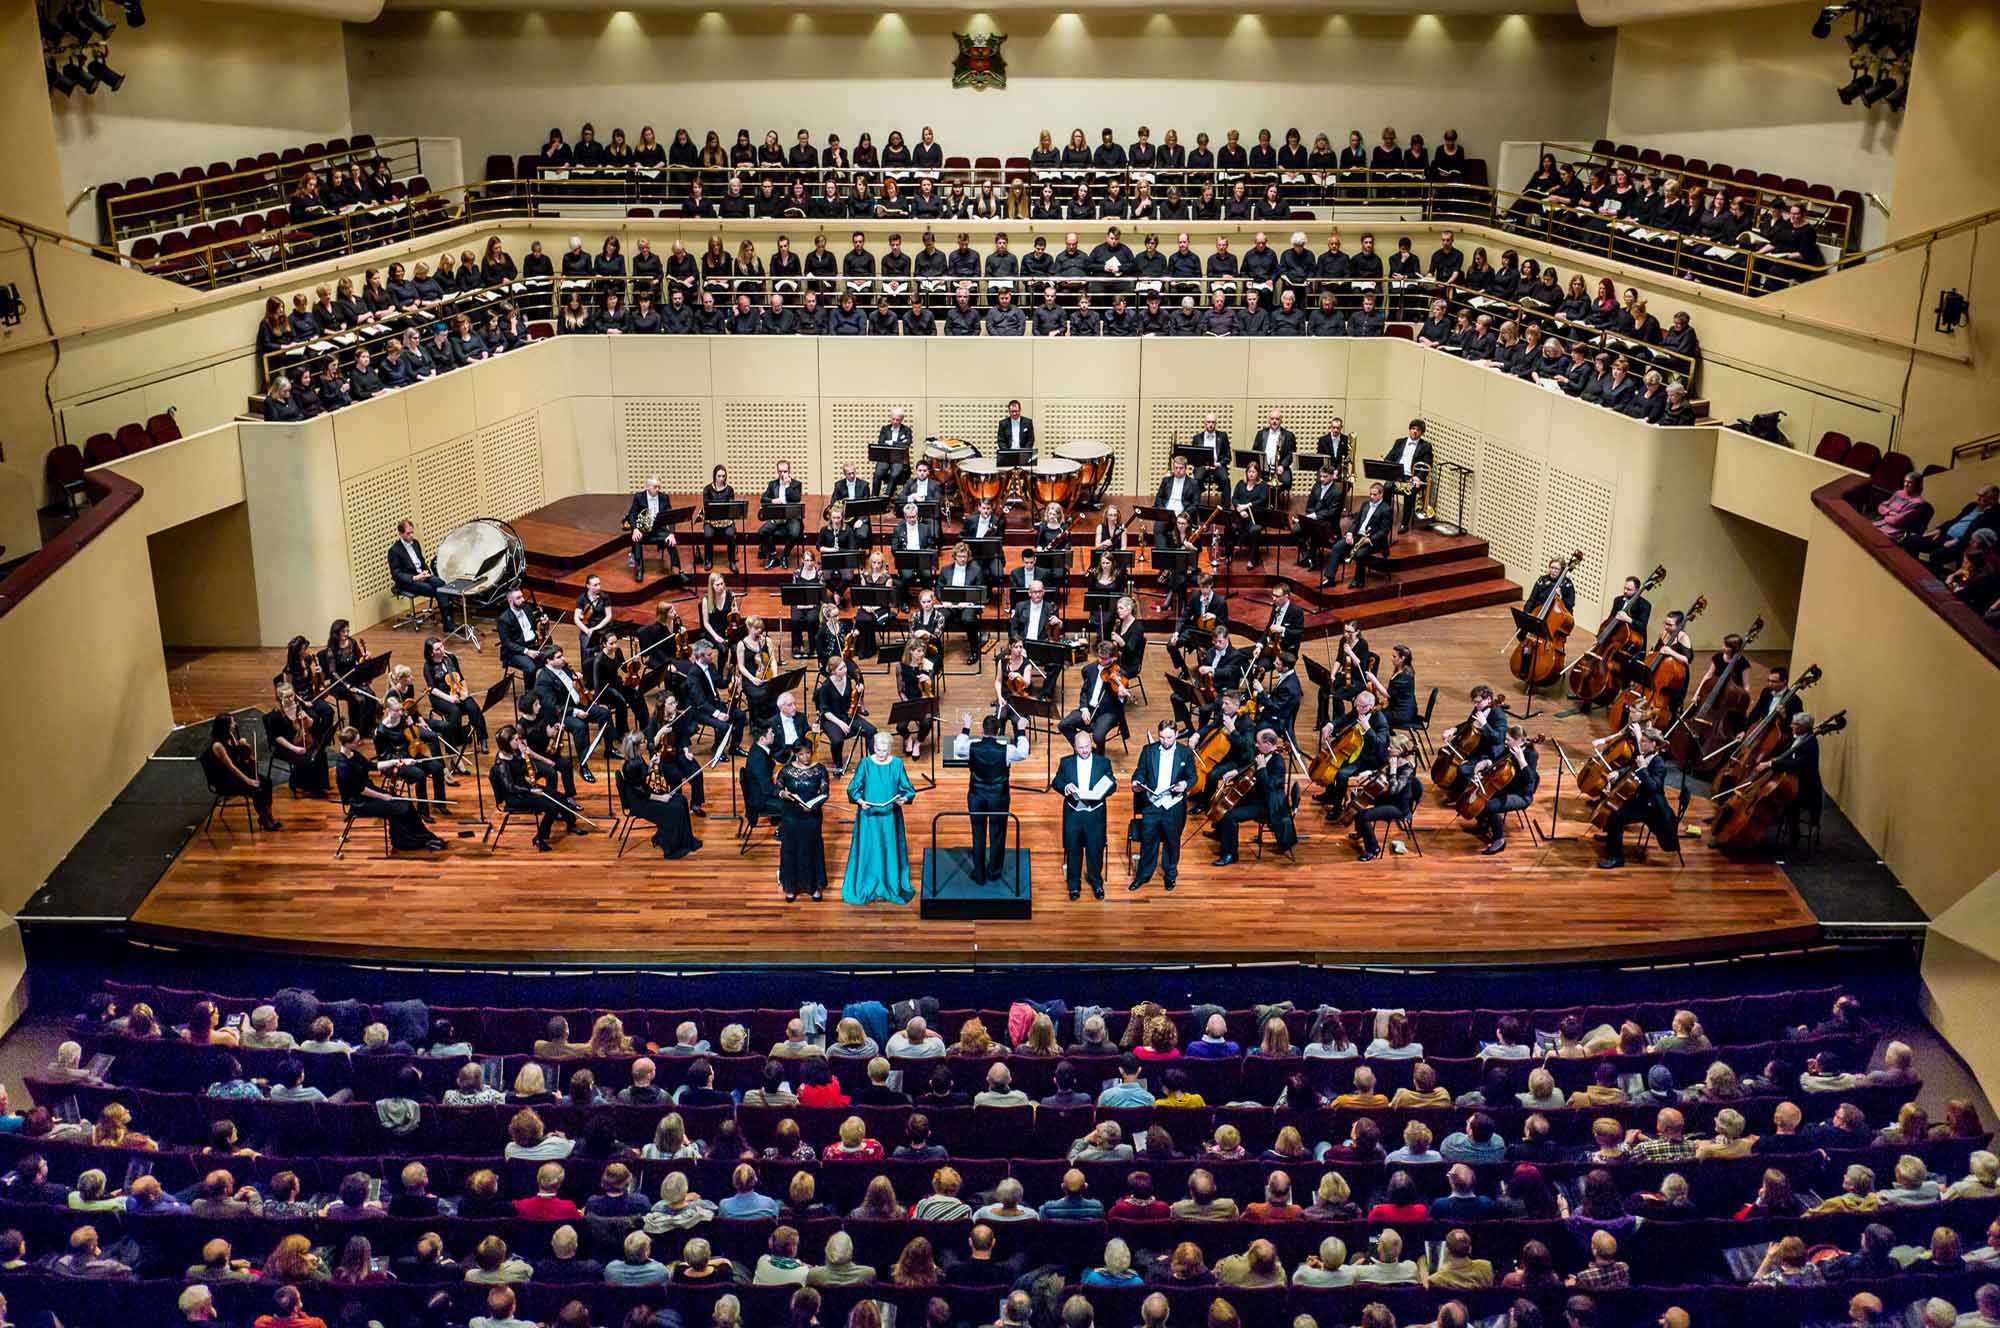 NTU Choir performing Verdi's Requiem with the London Philharmonic Orchestra